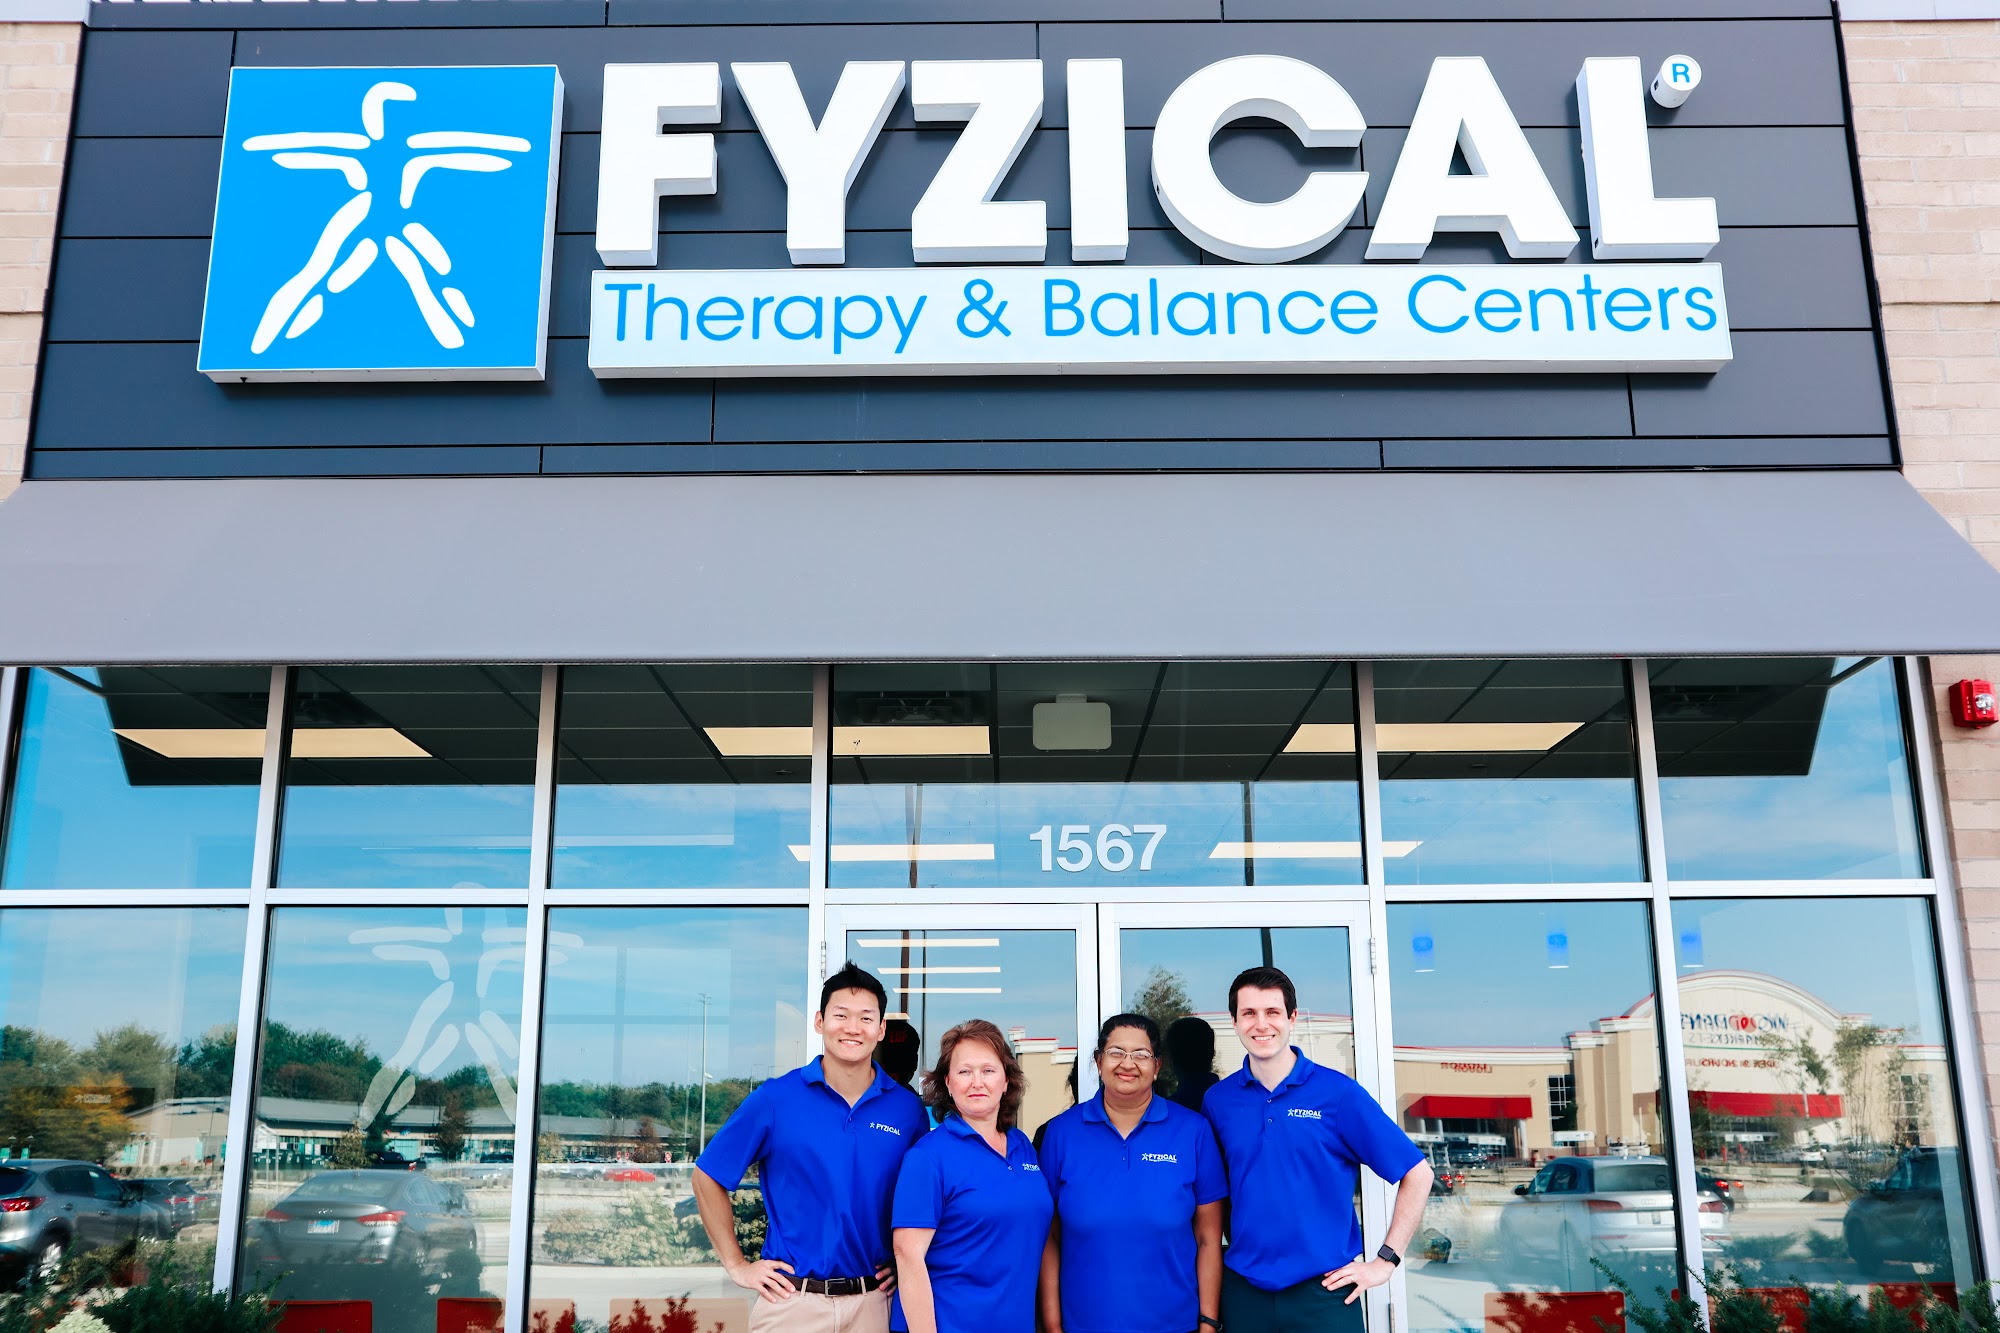 FYZICAL Therapy & Balance Centers - Buffalo Grove